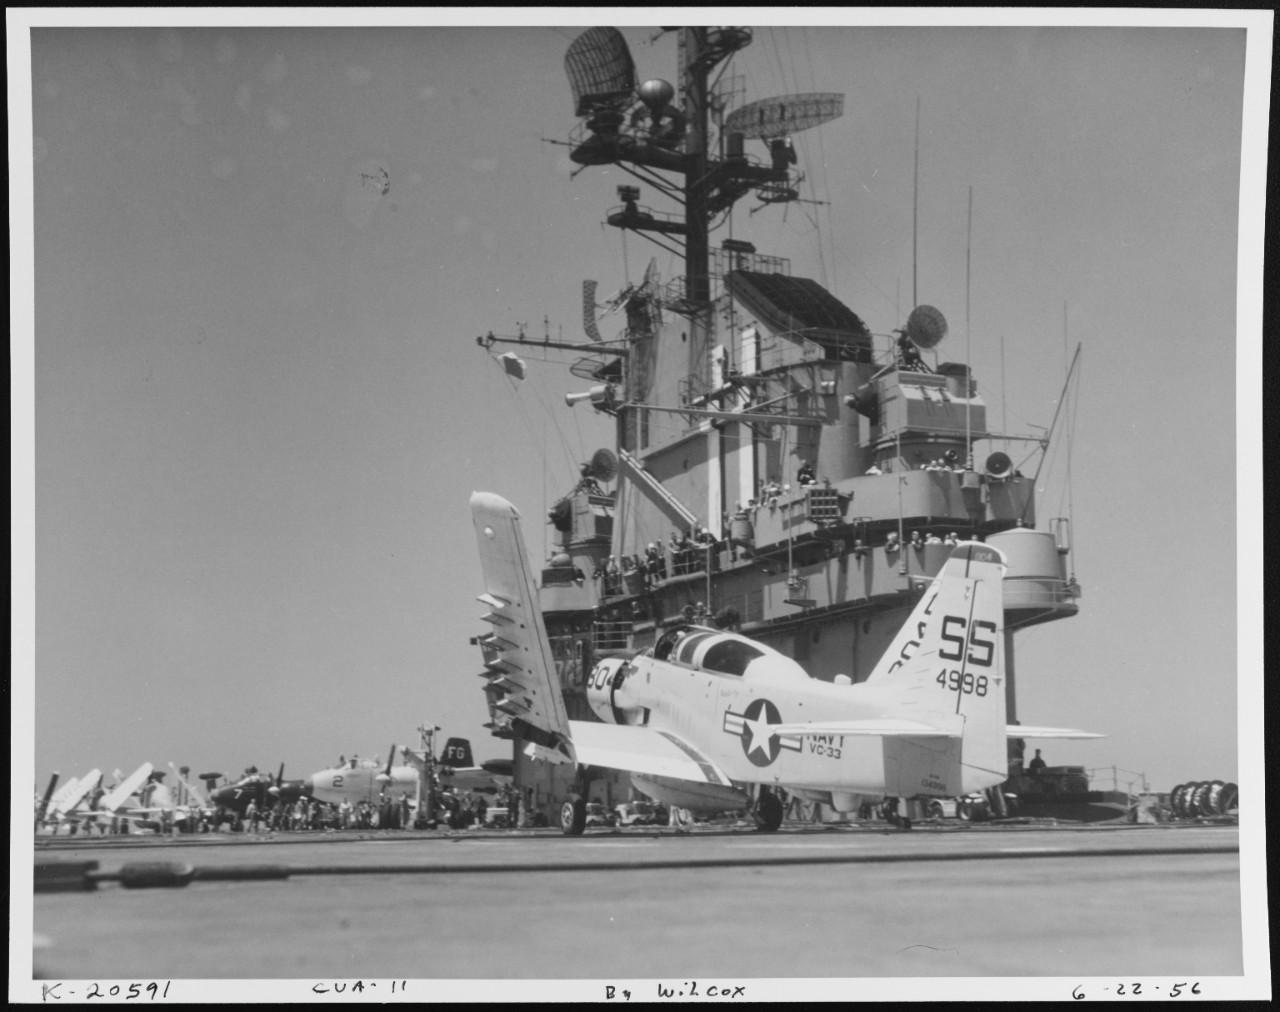 USS INTREPID (CA-11)